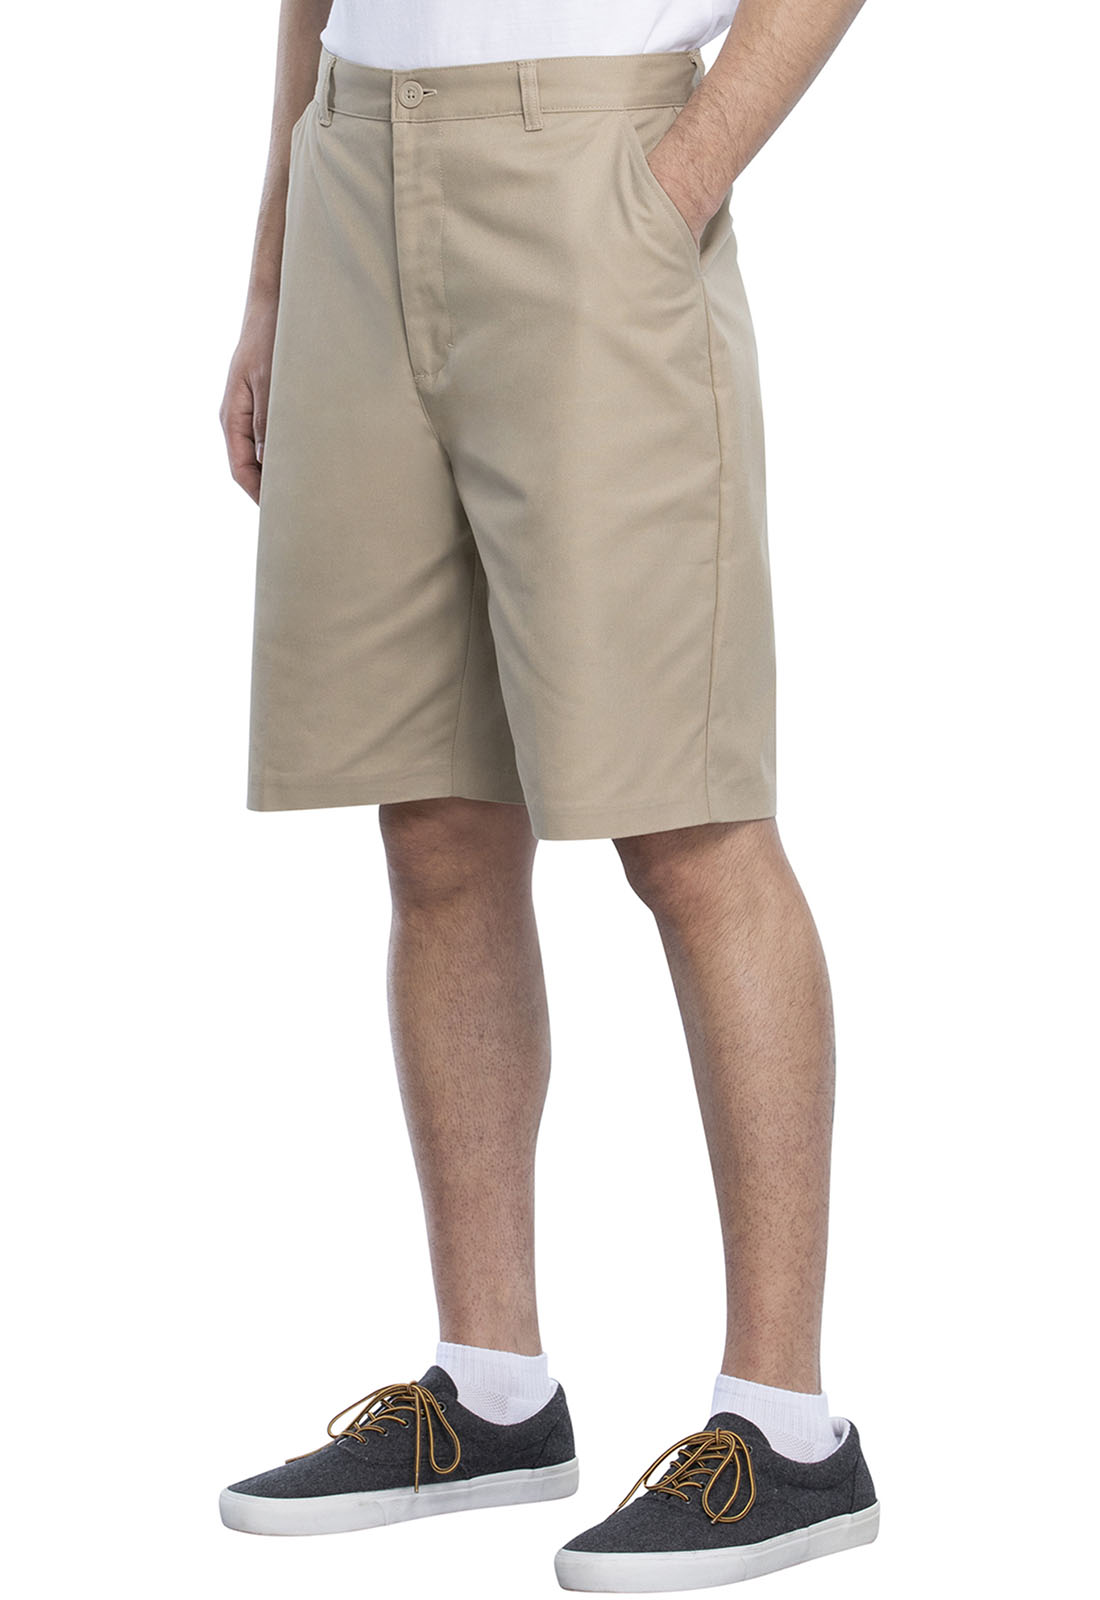 Real School Uniforms - Boys Flat Front Short - Plus